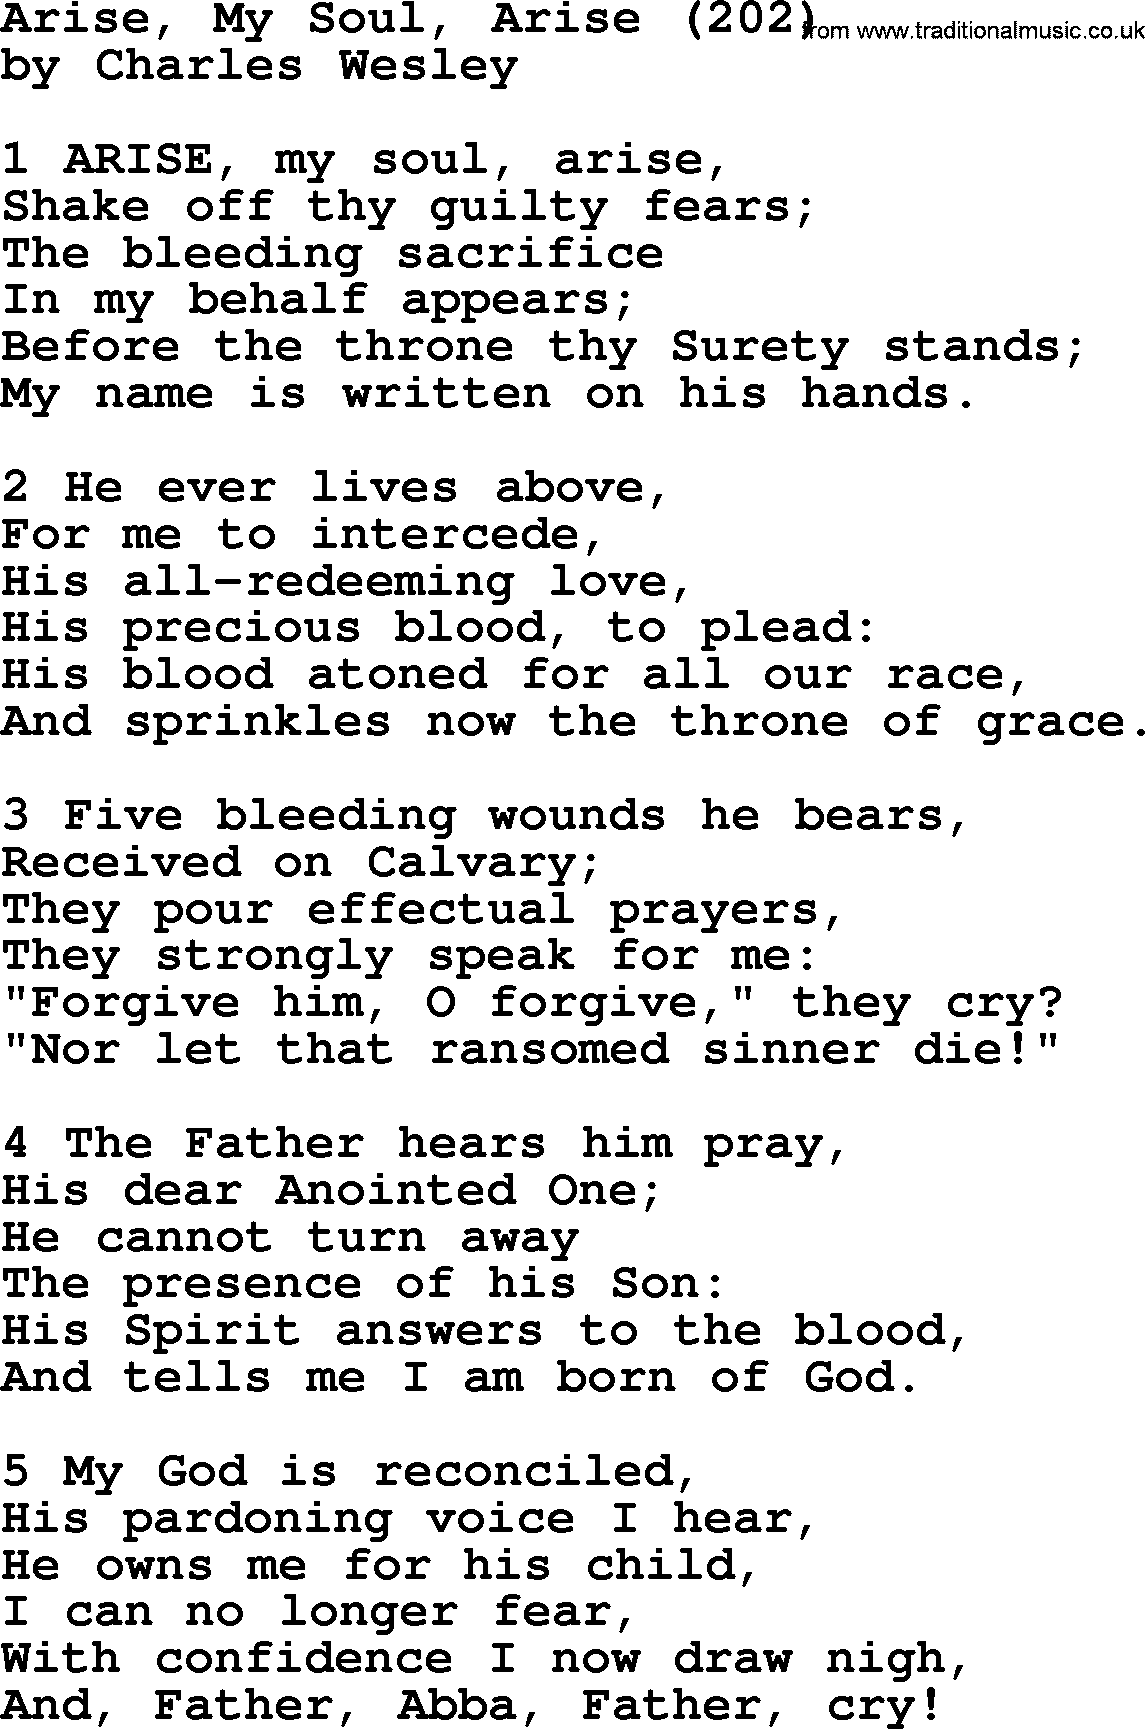 Charles Wesley hymn: Arise, My Soul, Arise (202), lyrics